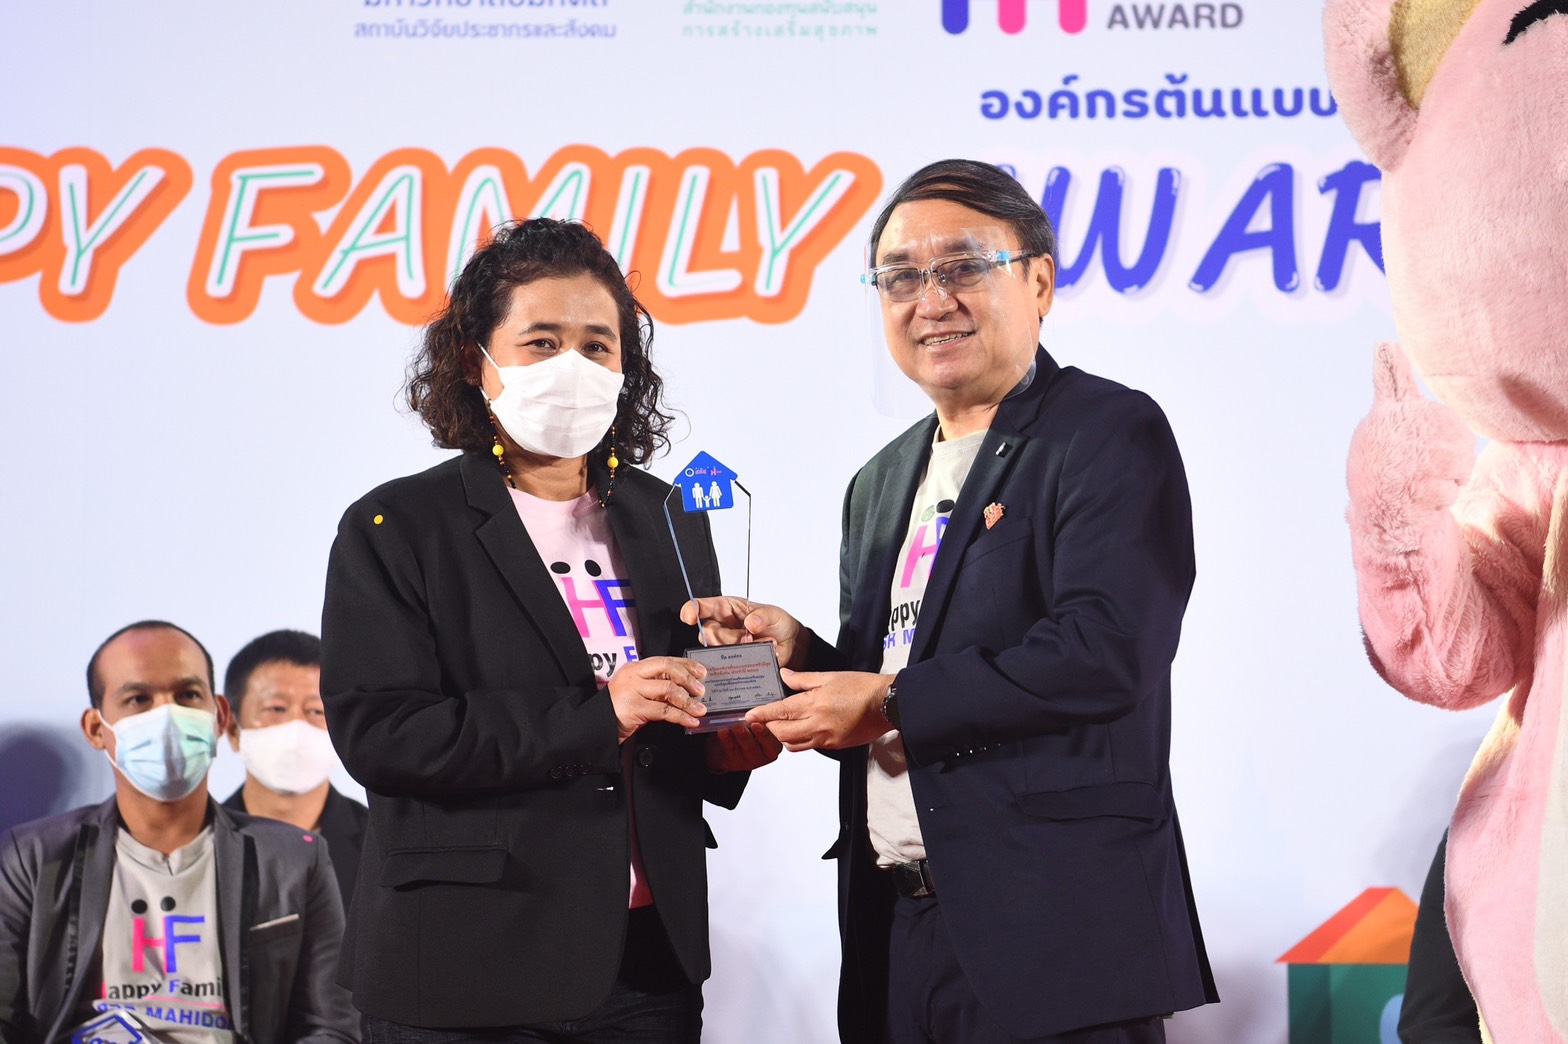 Happy Family Award กระตุ้นสร้างคุ้มกันให้ครอบครัวไทย thaihealth